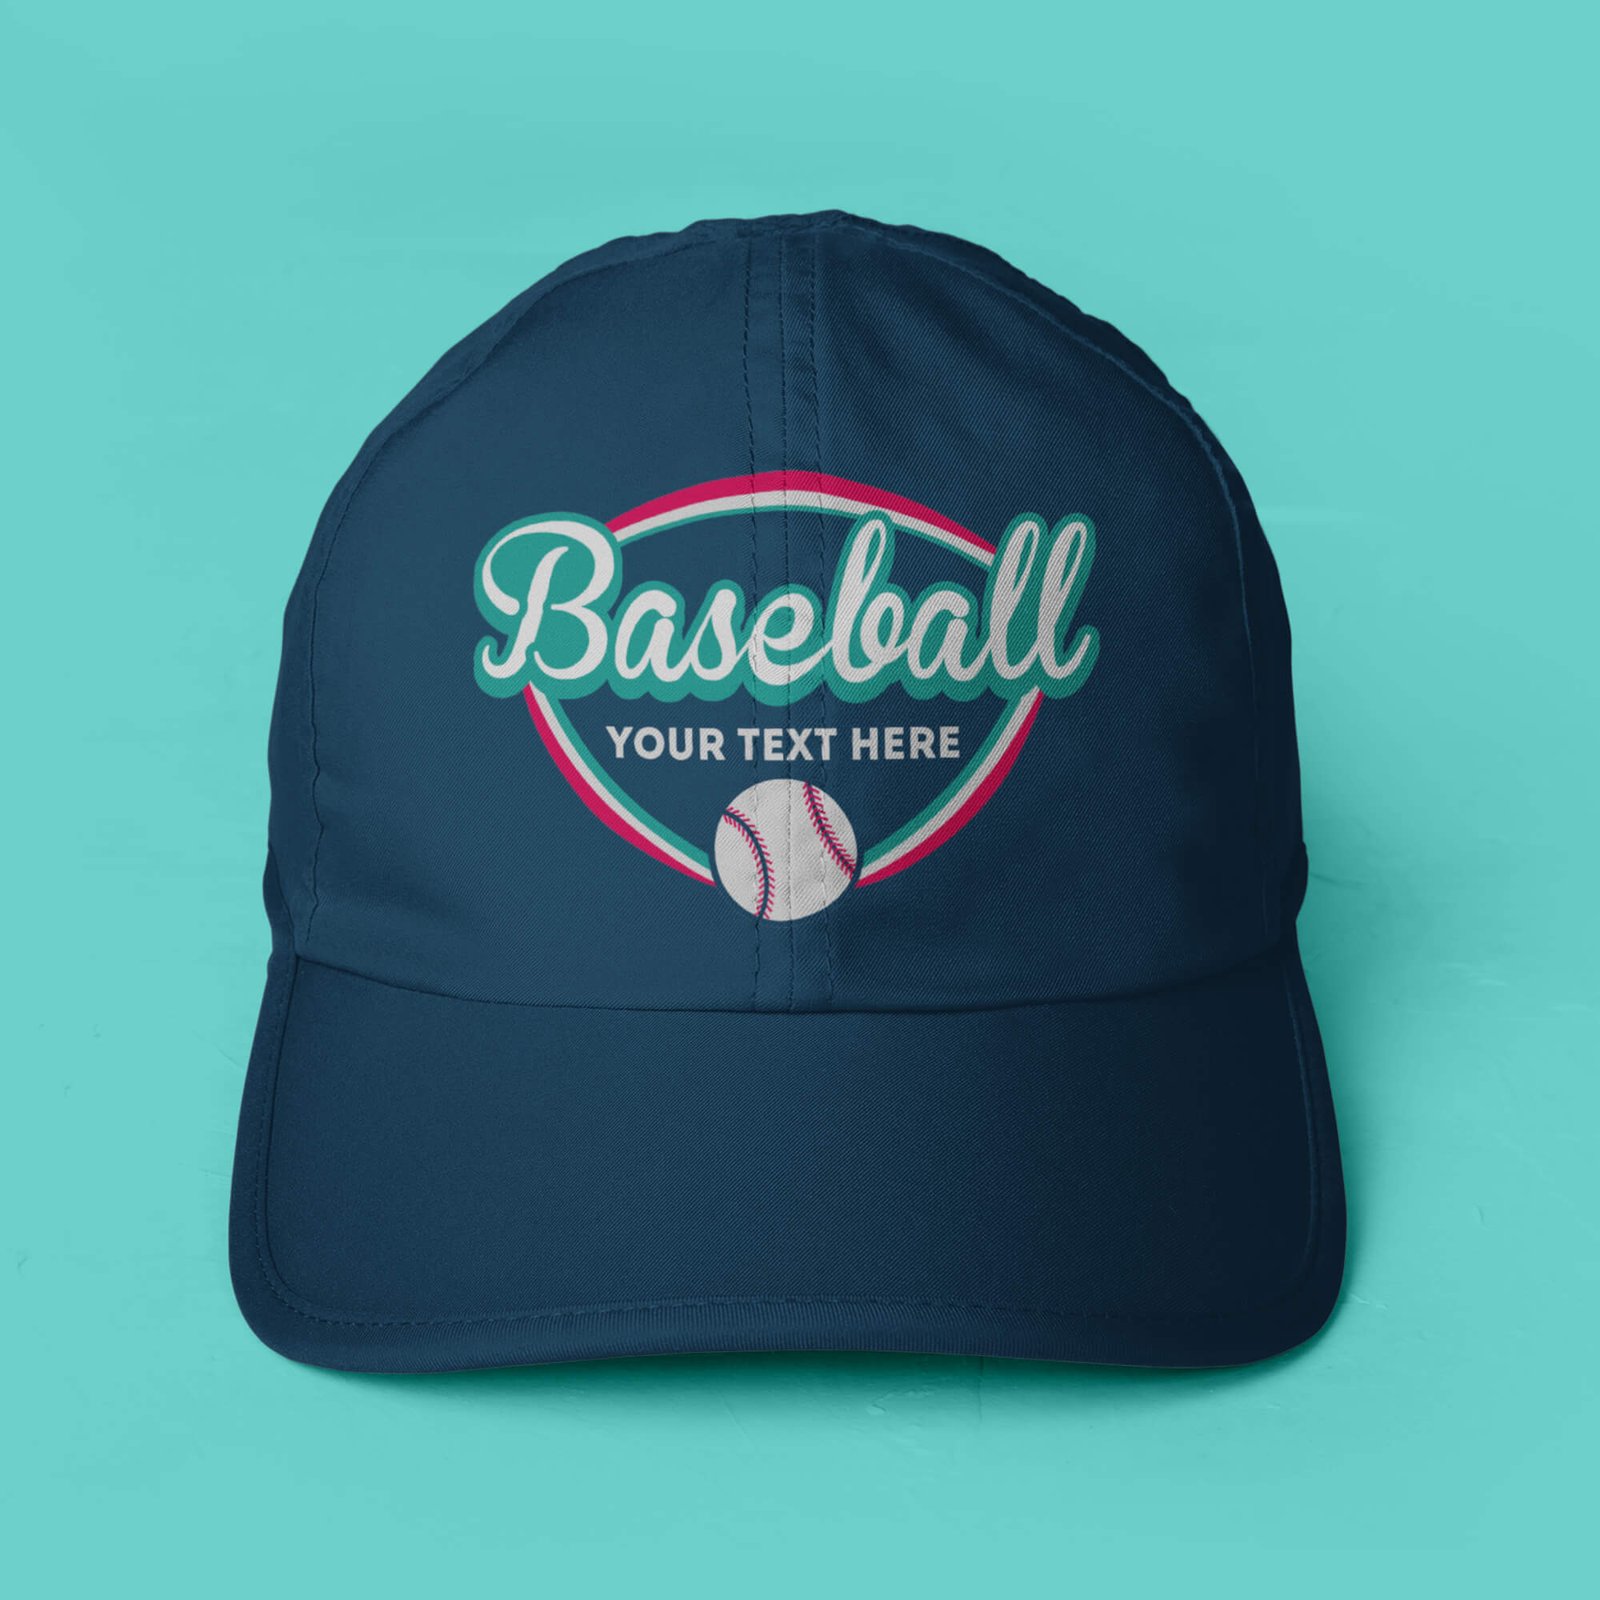 Design Free Baseball Cap Mockup PSD Template (1)